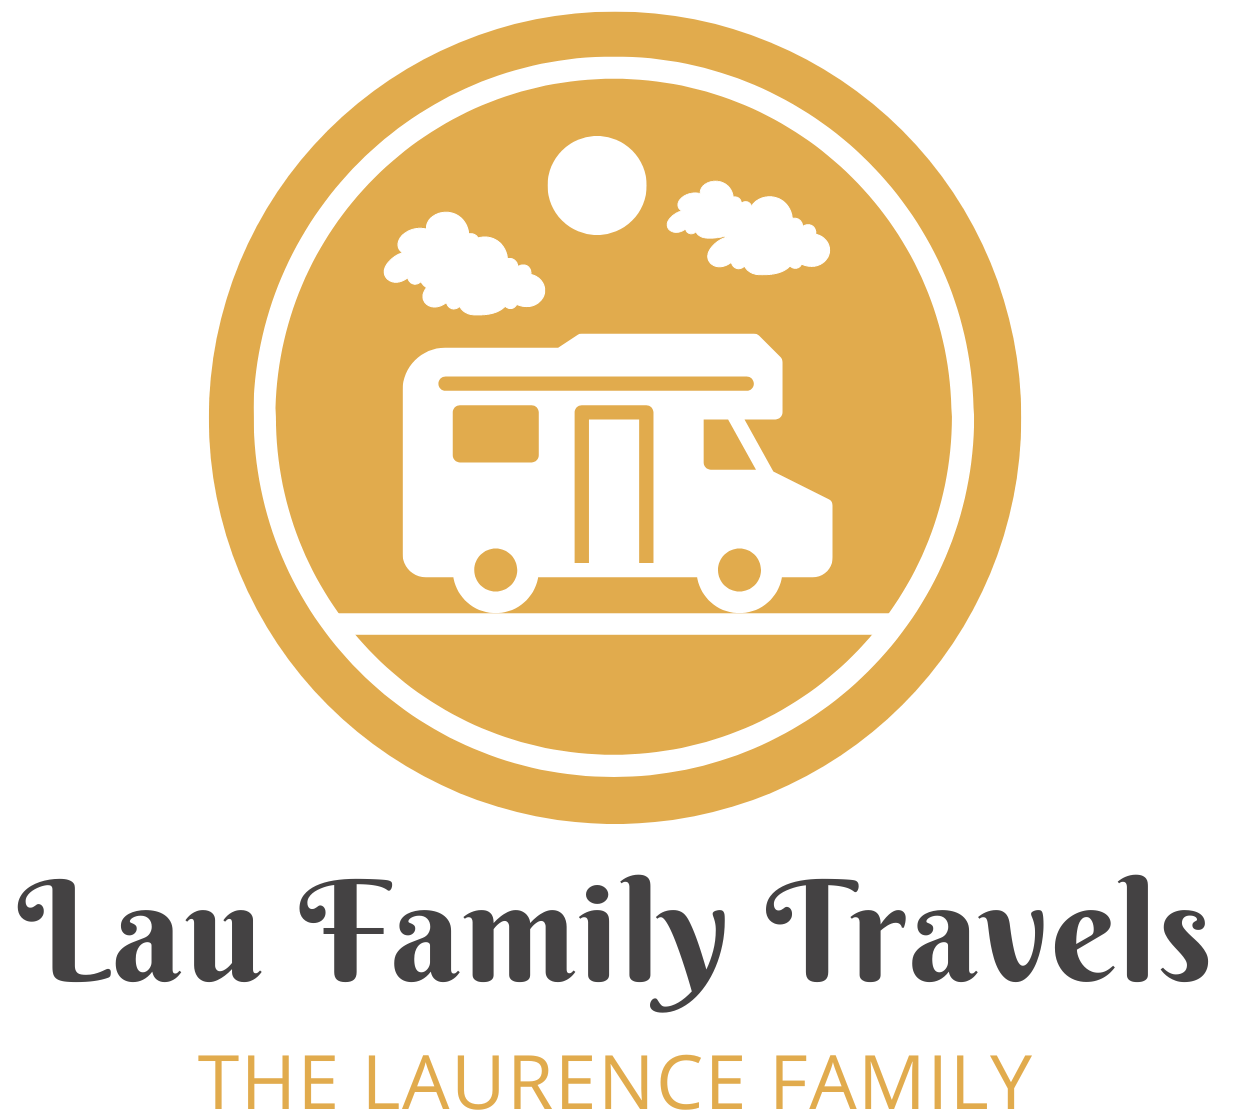 Lau Family Travels